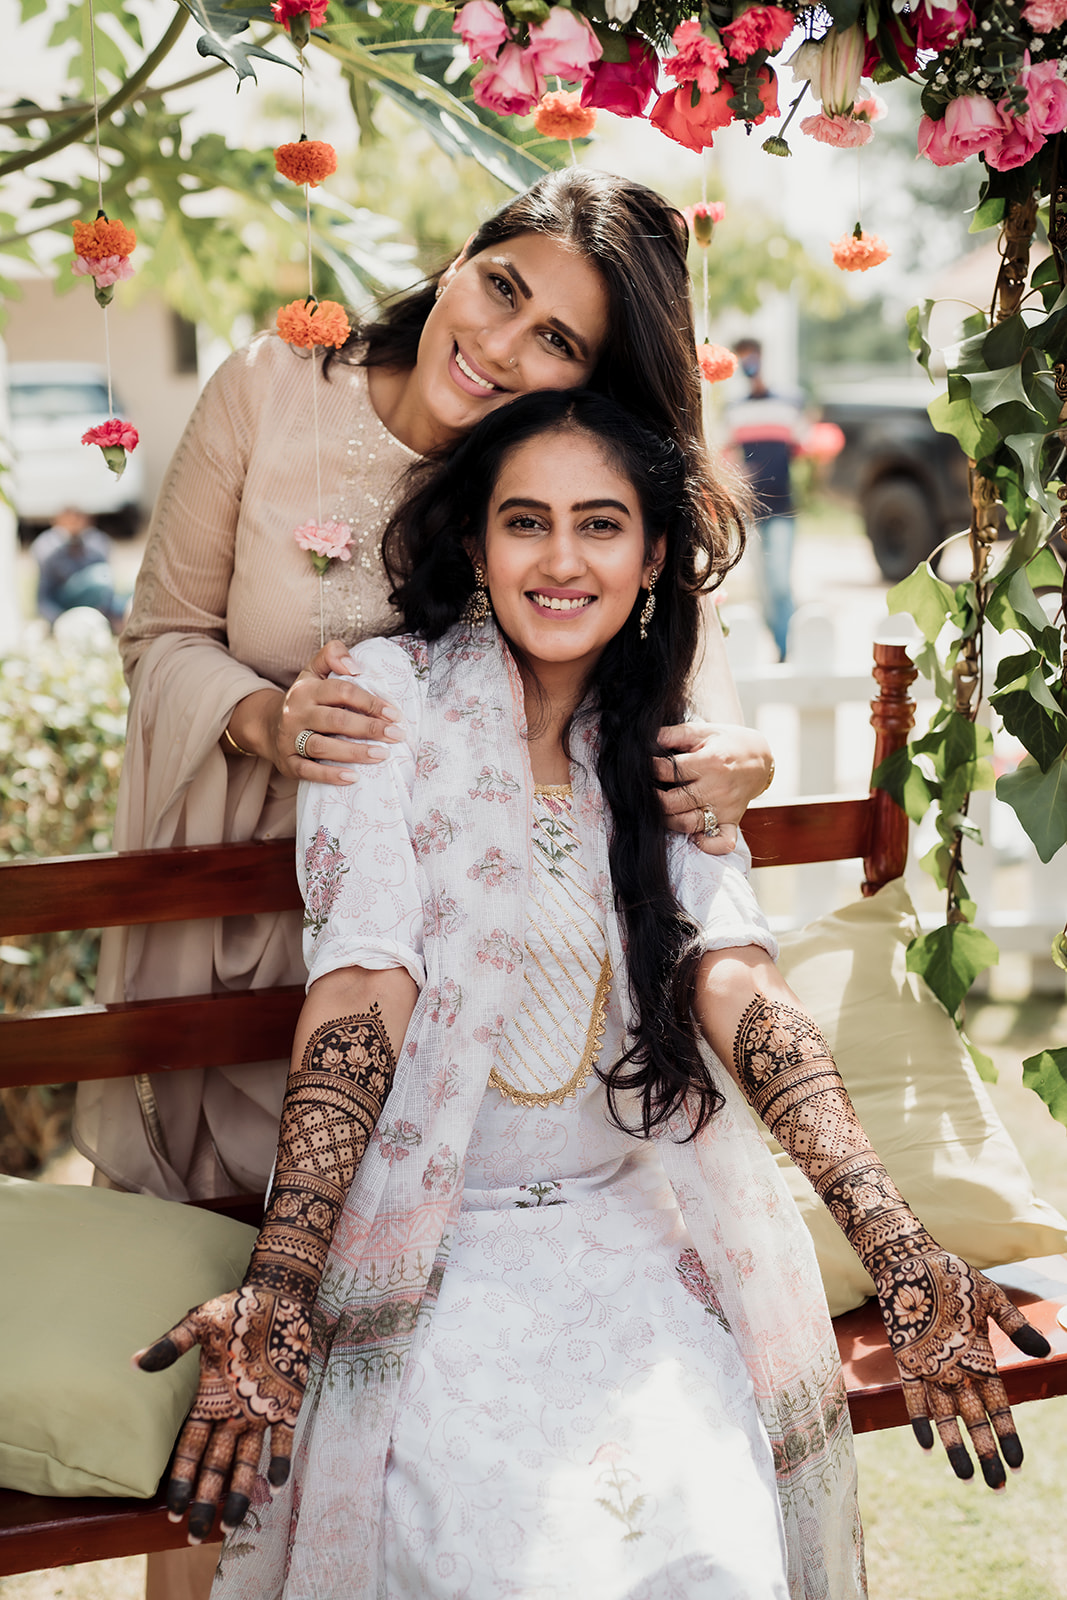 Mehendi elegance: The bride showcases intricate mehendi designs on her hands in a beautiful image.